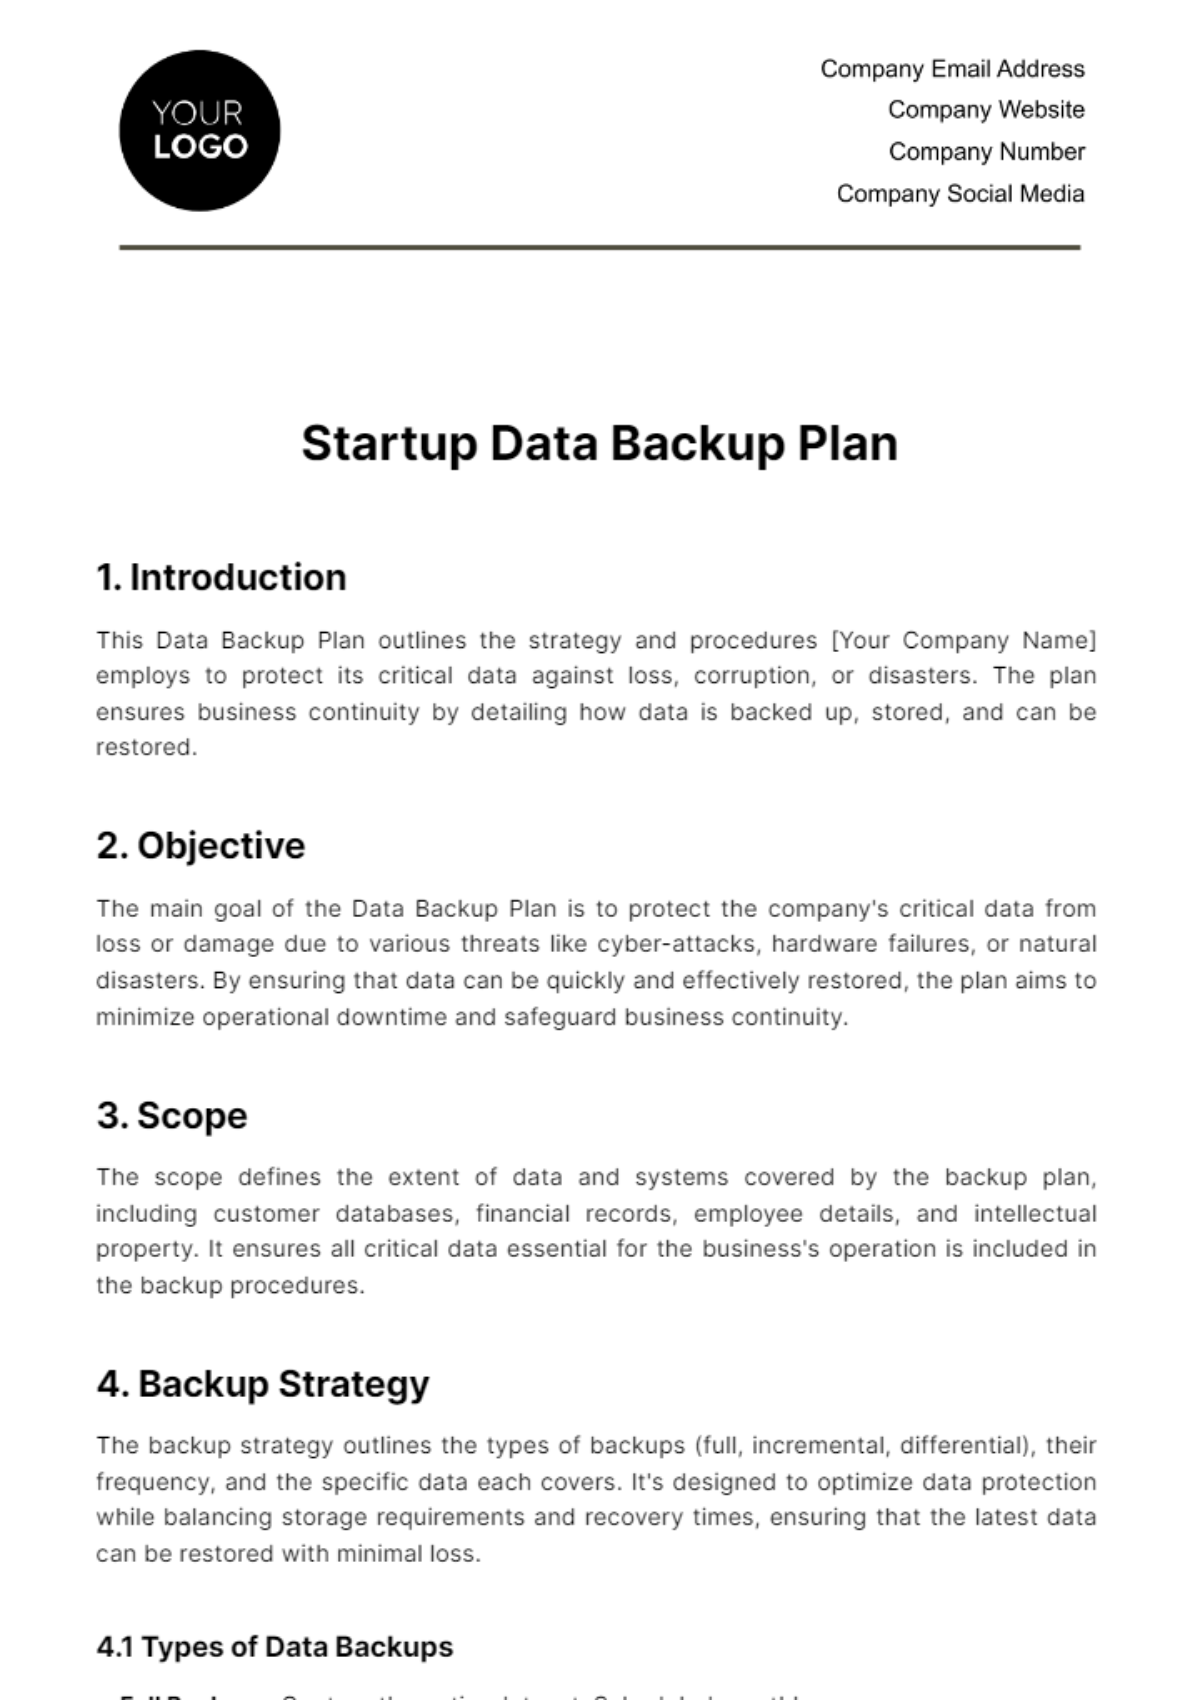 Startup Data Backup Plan Template